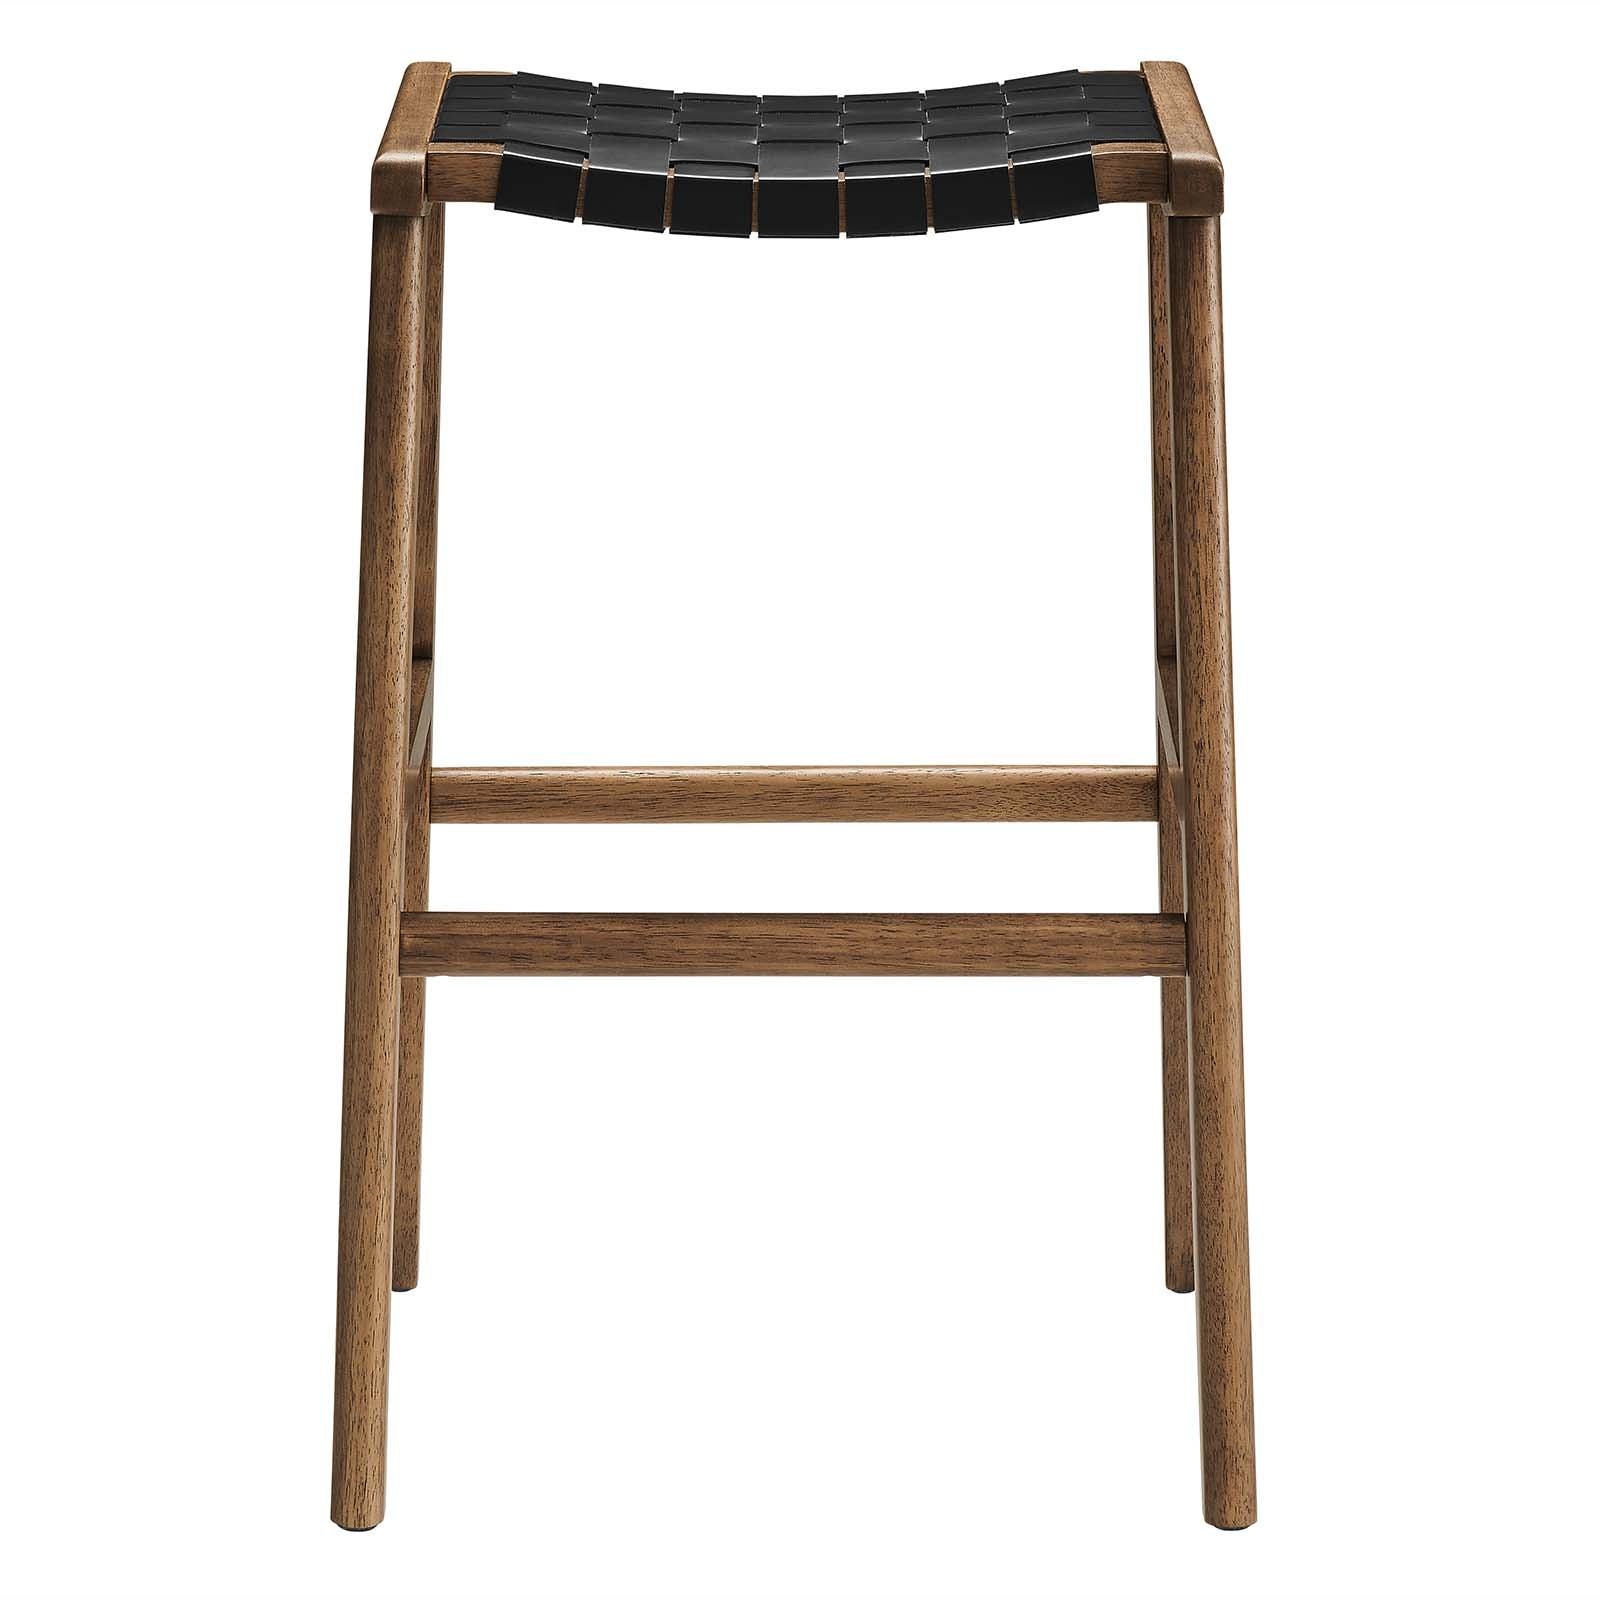 Saorise Woven Leather Wood Bar Stool - Set of 2 - East Shore Modern Home Furnishings